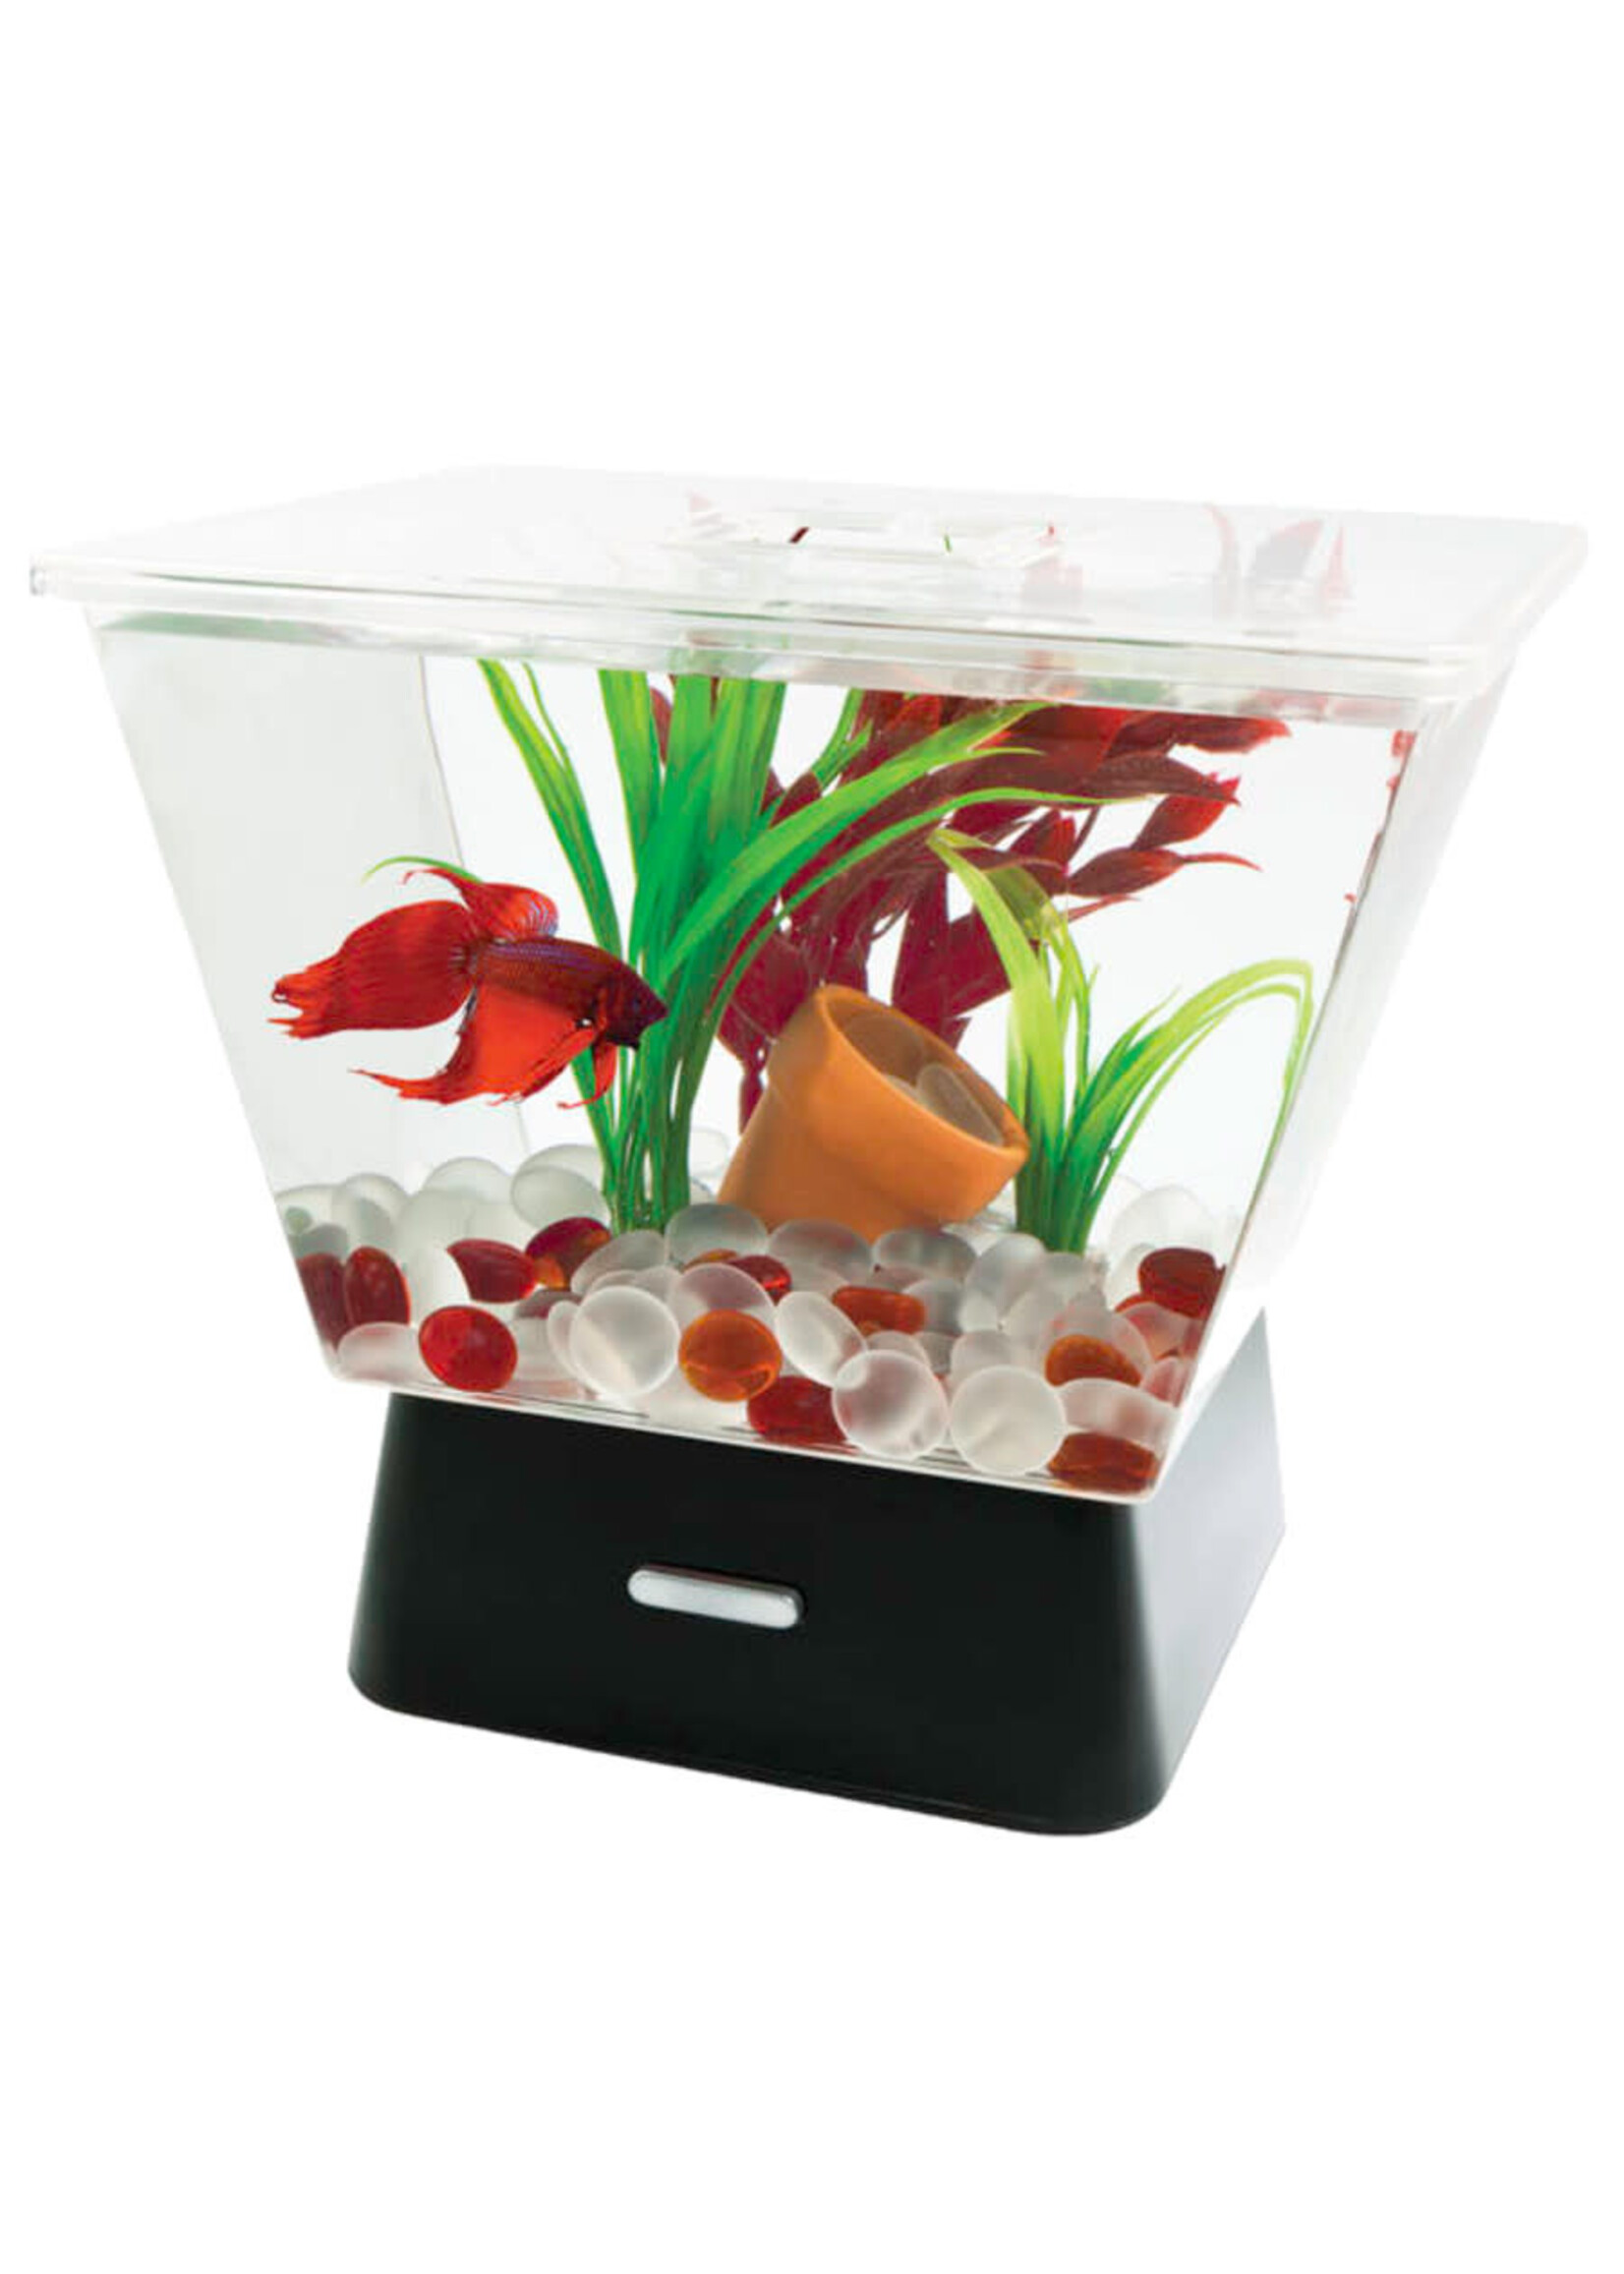 Tetra Betta Fish Aquarium, 0.5 Gallon Fish Bowl with Built in LED